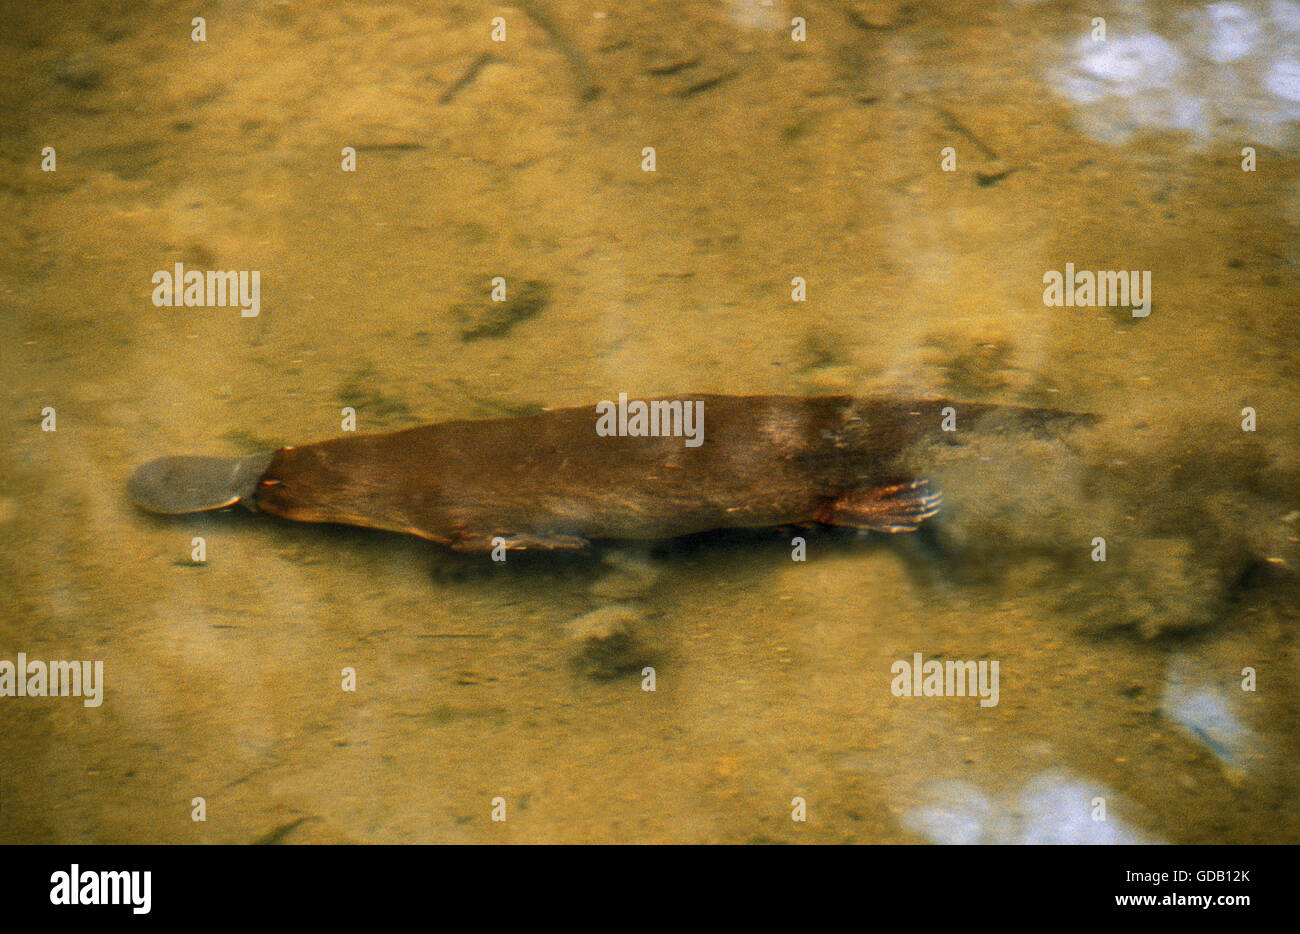 PLATYPUS ornithorhynchus anatinus, ADULT SWIMMING IN RIVER, AUSTRALIA Stock Photo